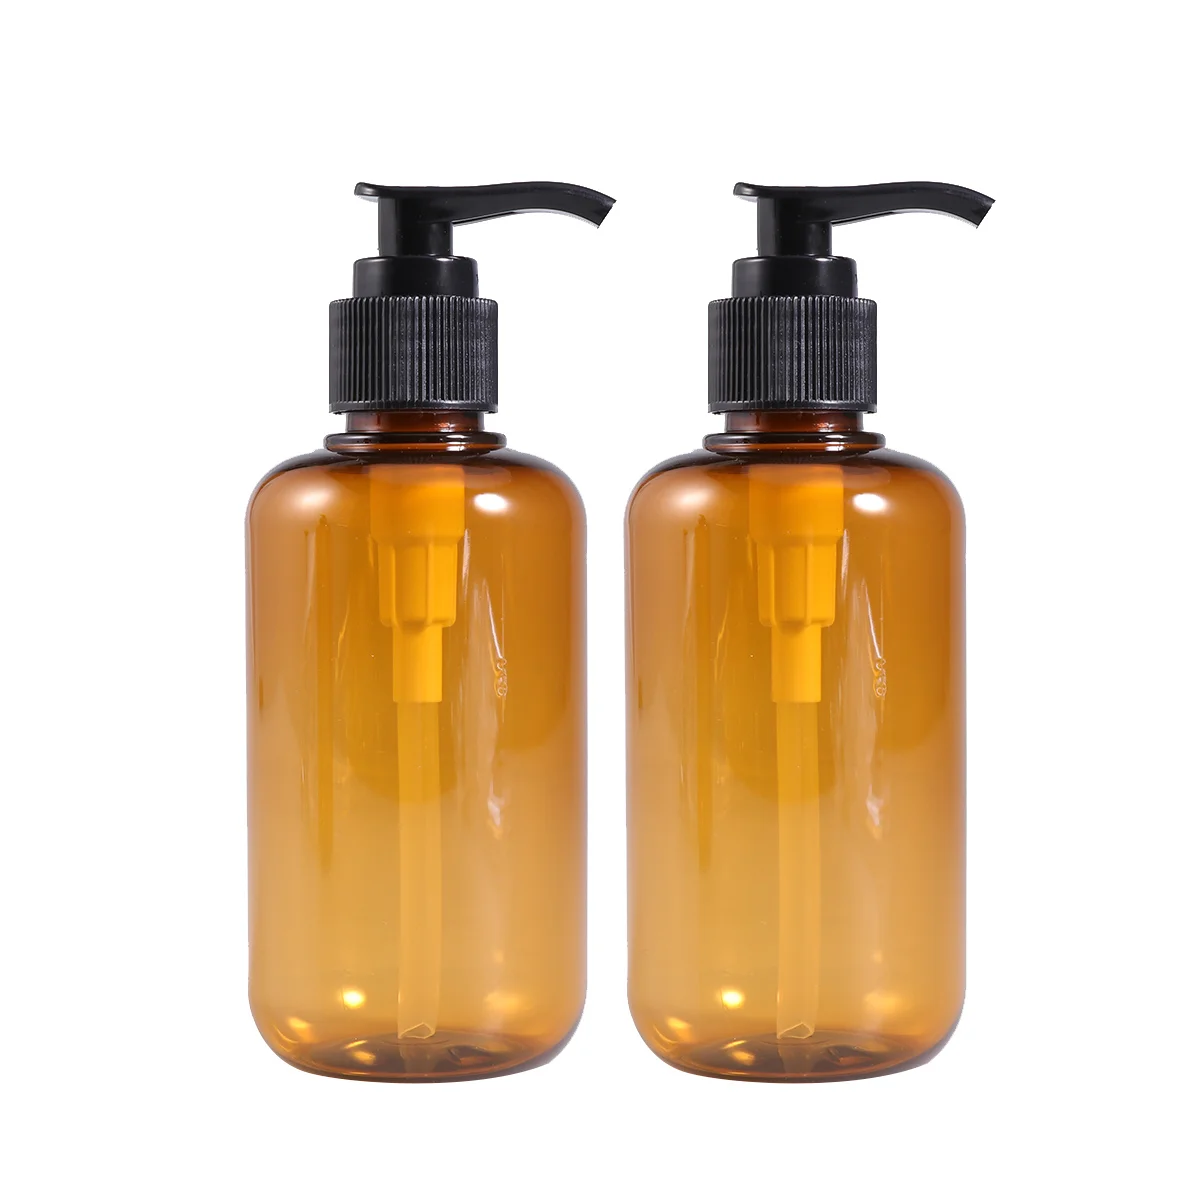 

Dispenser Pump Bottles Bottle Soap Shampoo Amber Lotion Empty Liquid Refillable Hand Storage Bathroom Travel Containers